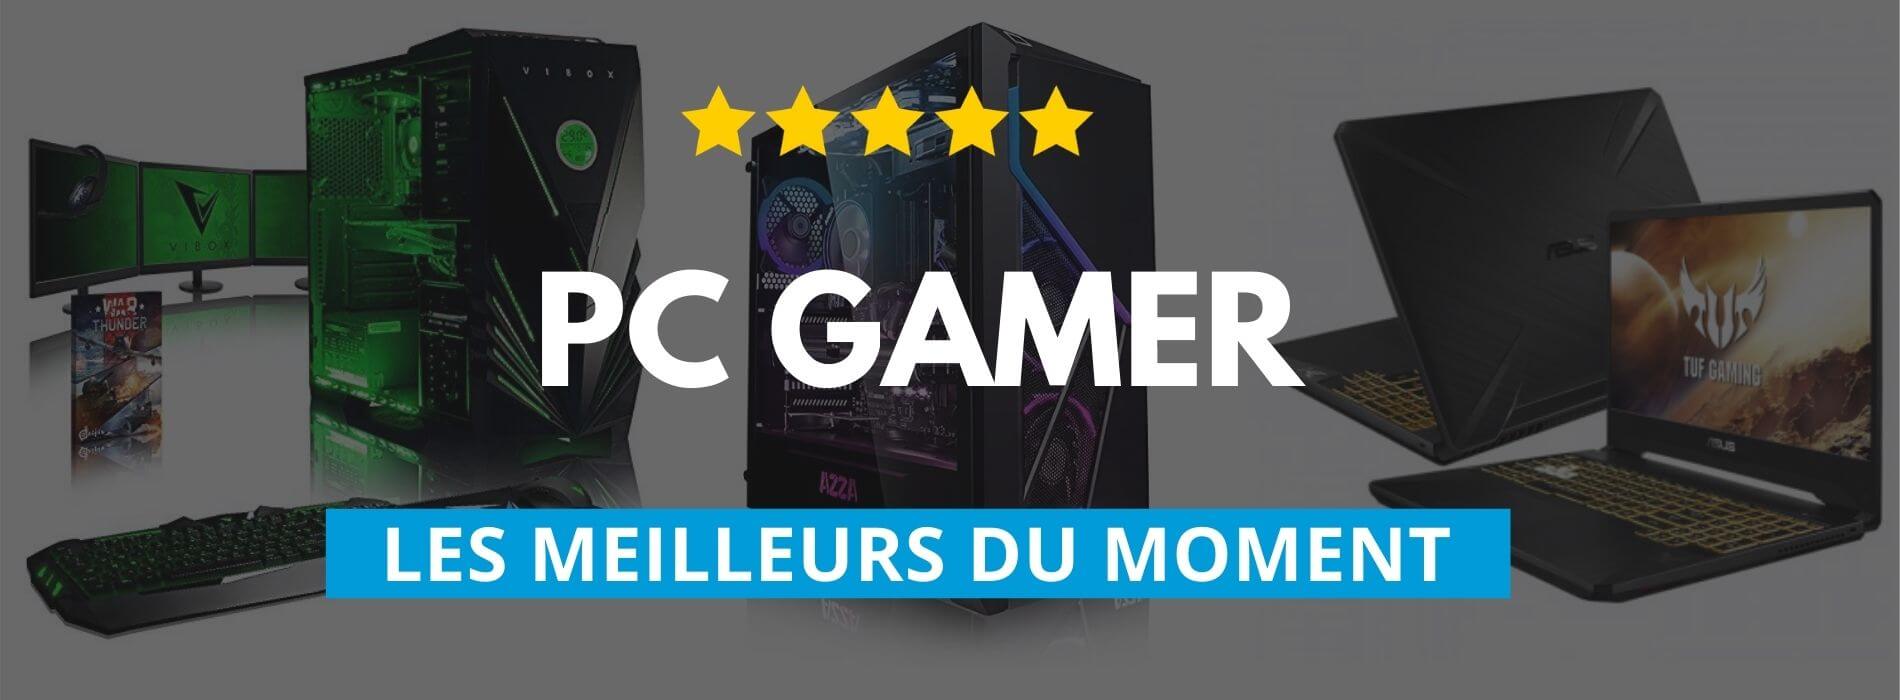 Vibox - I-3 PC Gamer - PC Fixe Gamer - Rue du Commerce